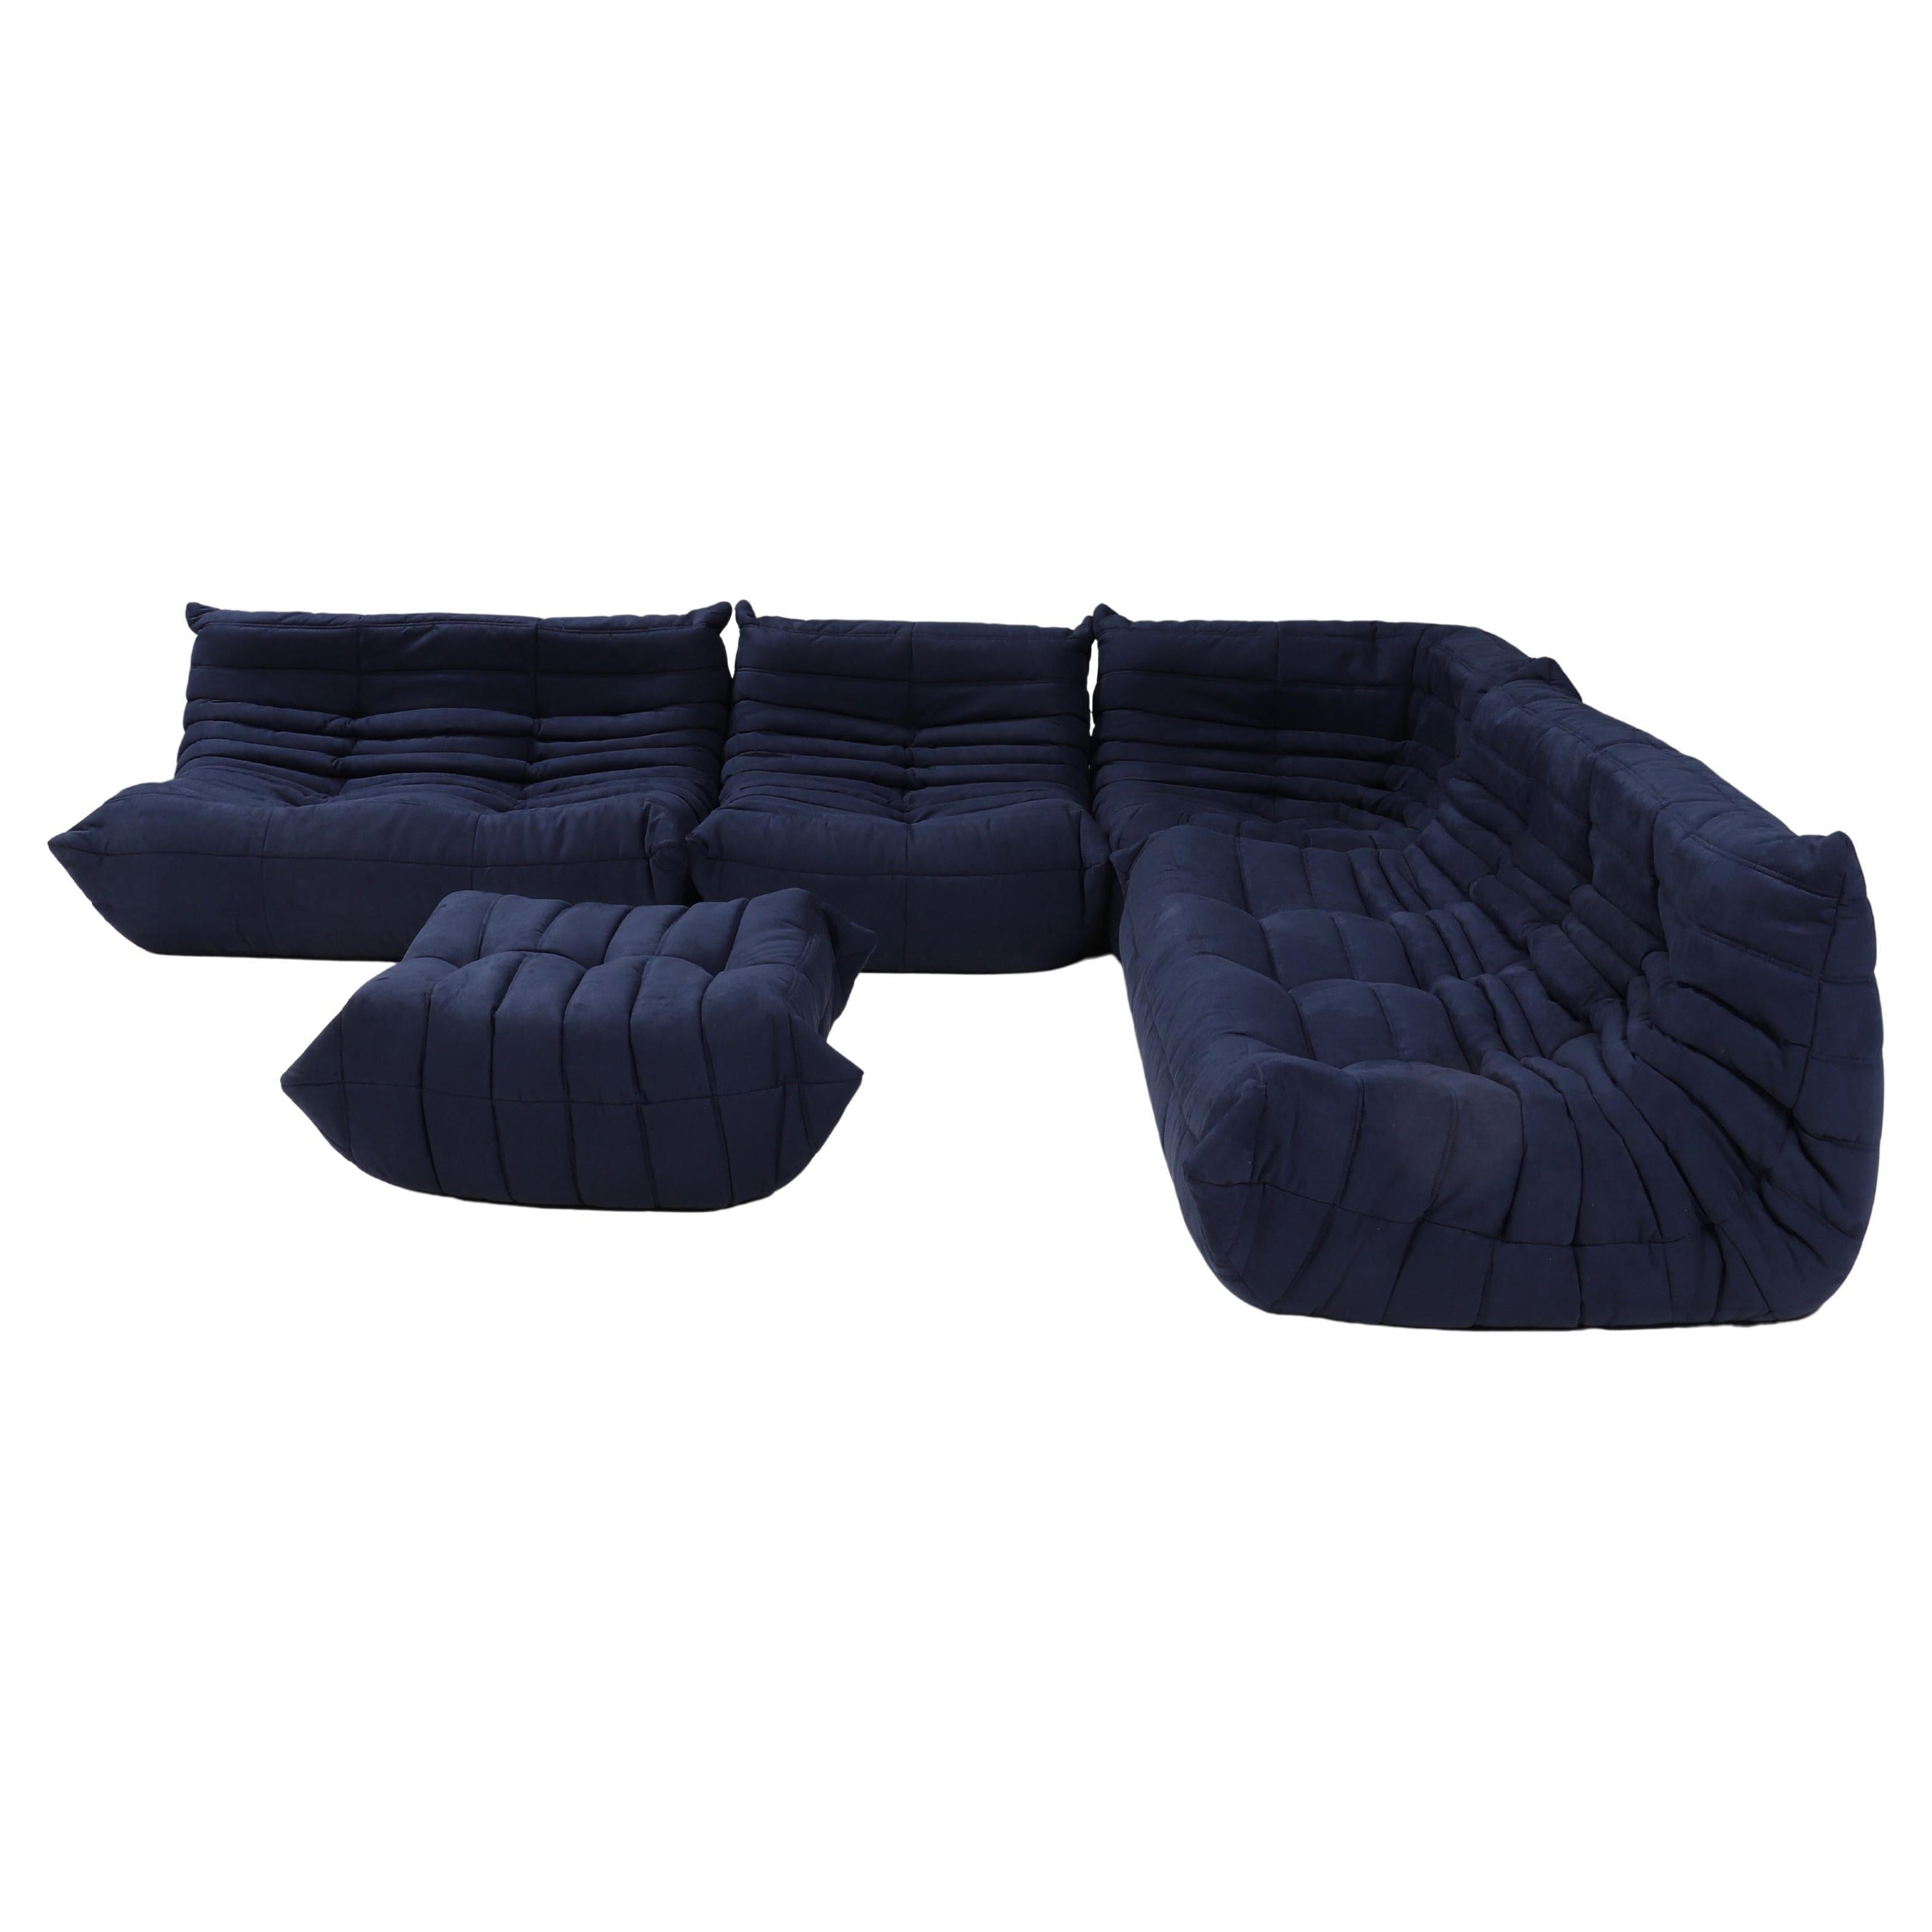 Ligne Roset by Michel Ducaroy Togo Dark Blue Sofa and Footstool, Set of 5